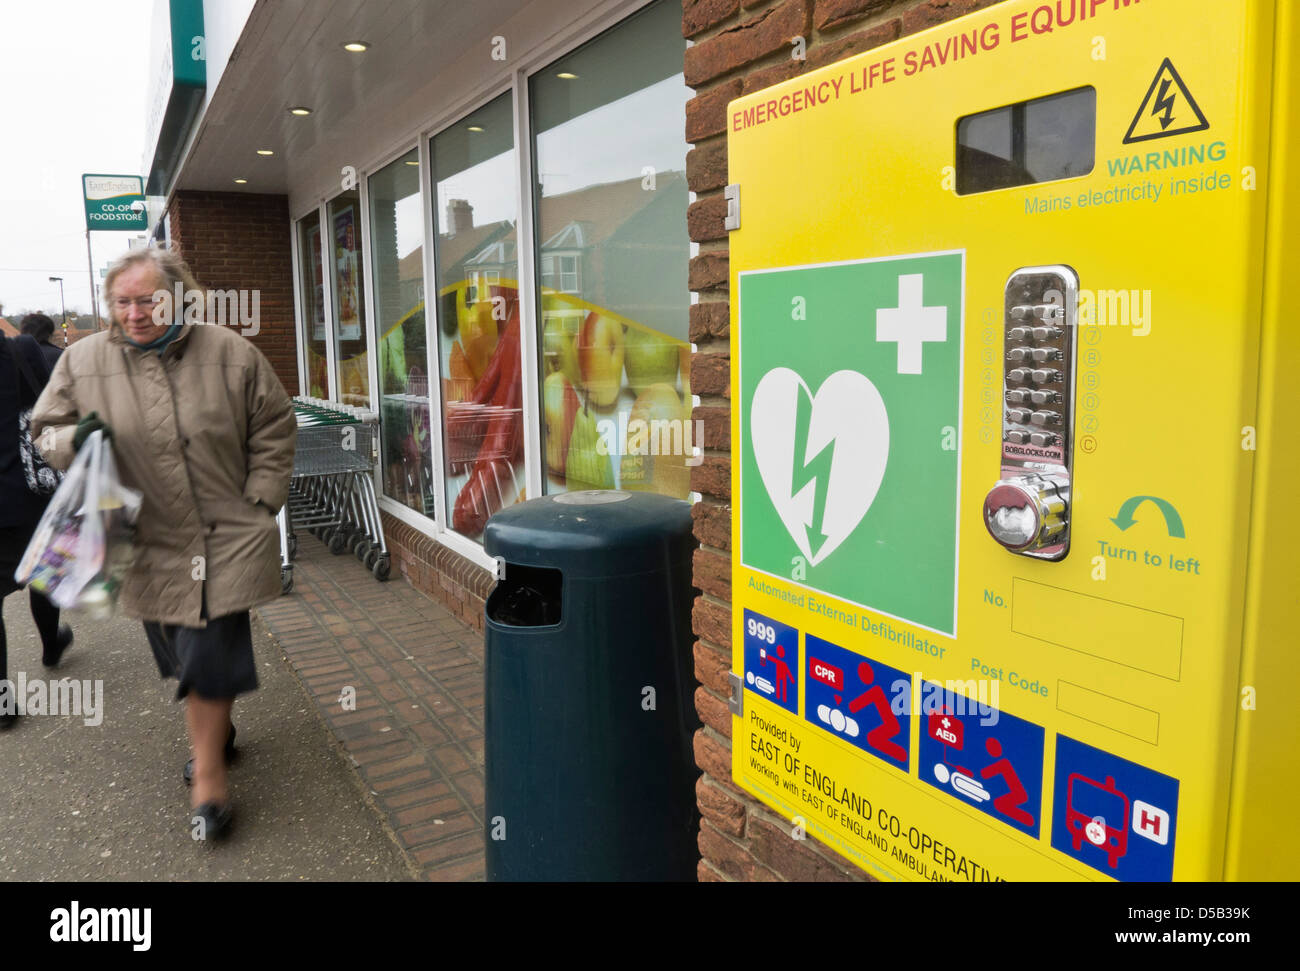 Automatic external defibrillator machine on an English street. Stock Photo